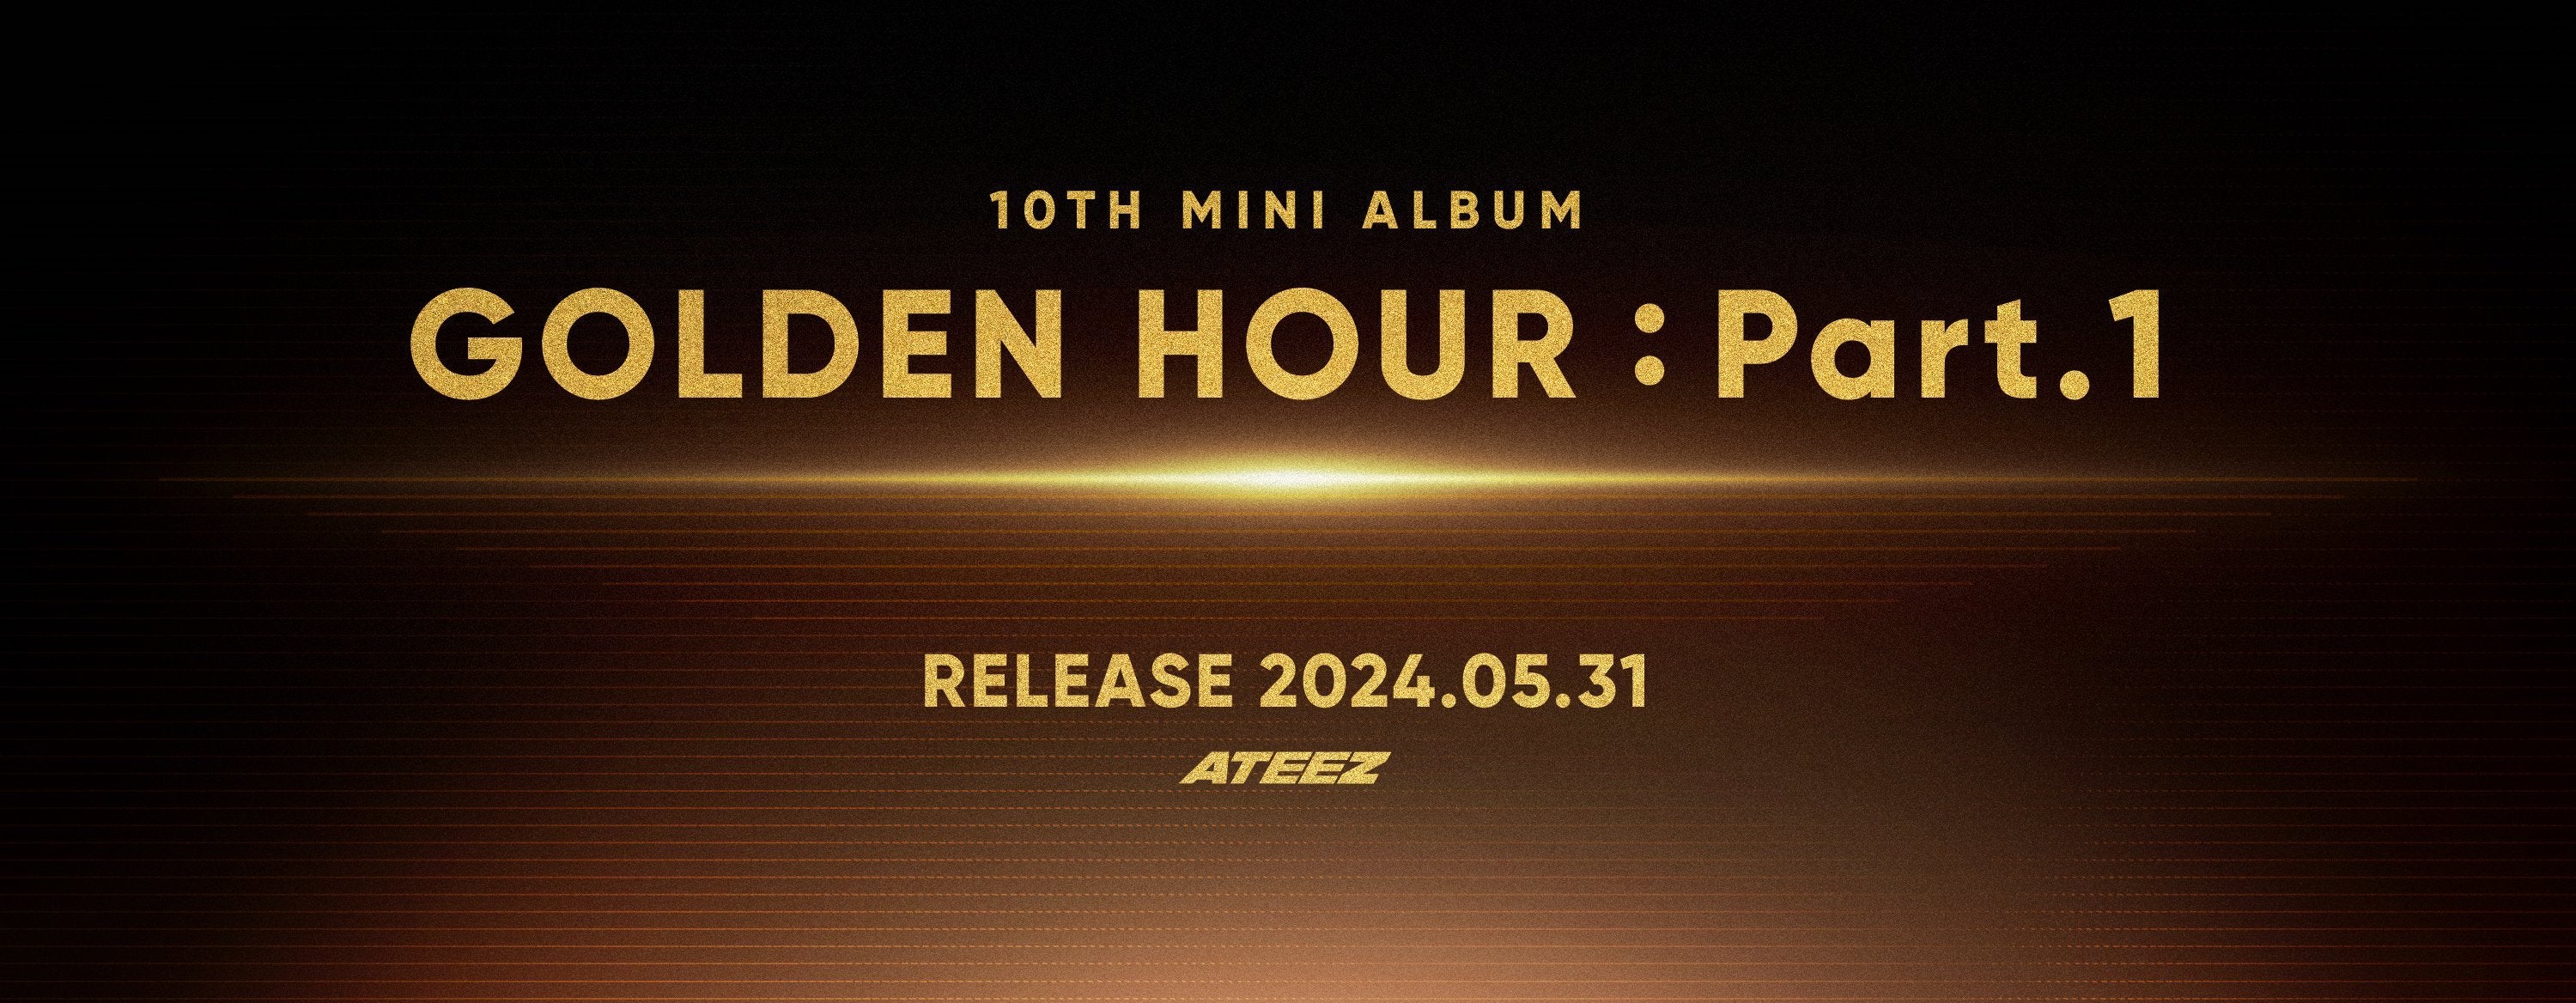 ATEEZ - 10TH MINI ALBUM [GOLDEN HOUR: PART.1]